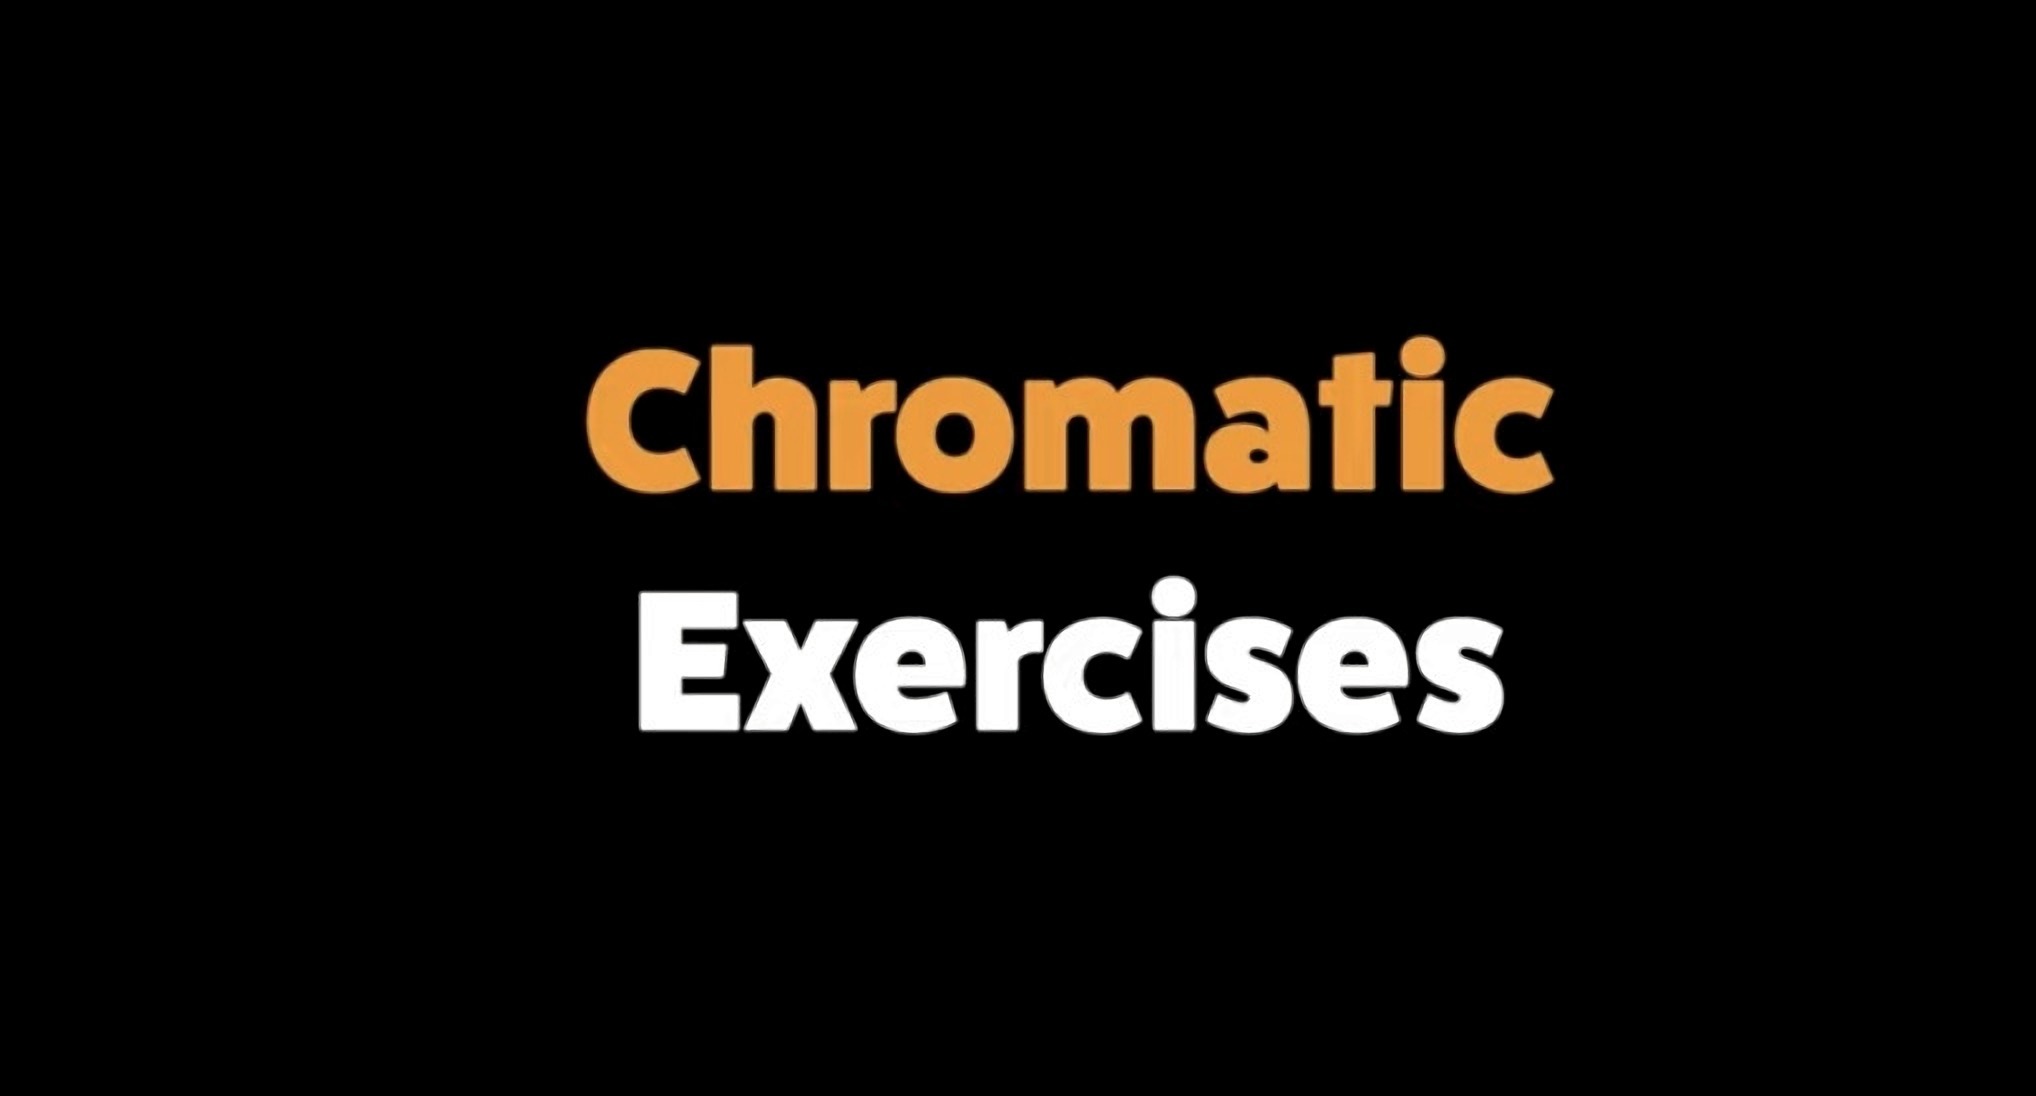 chromatic exercises